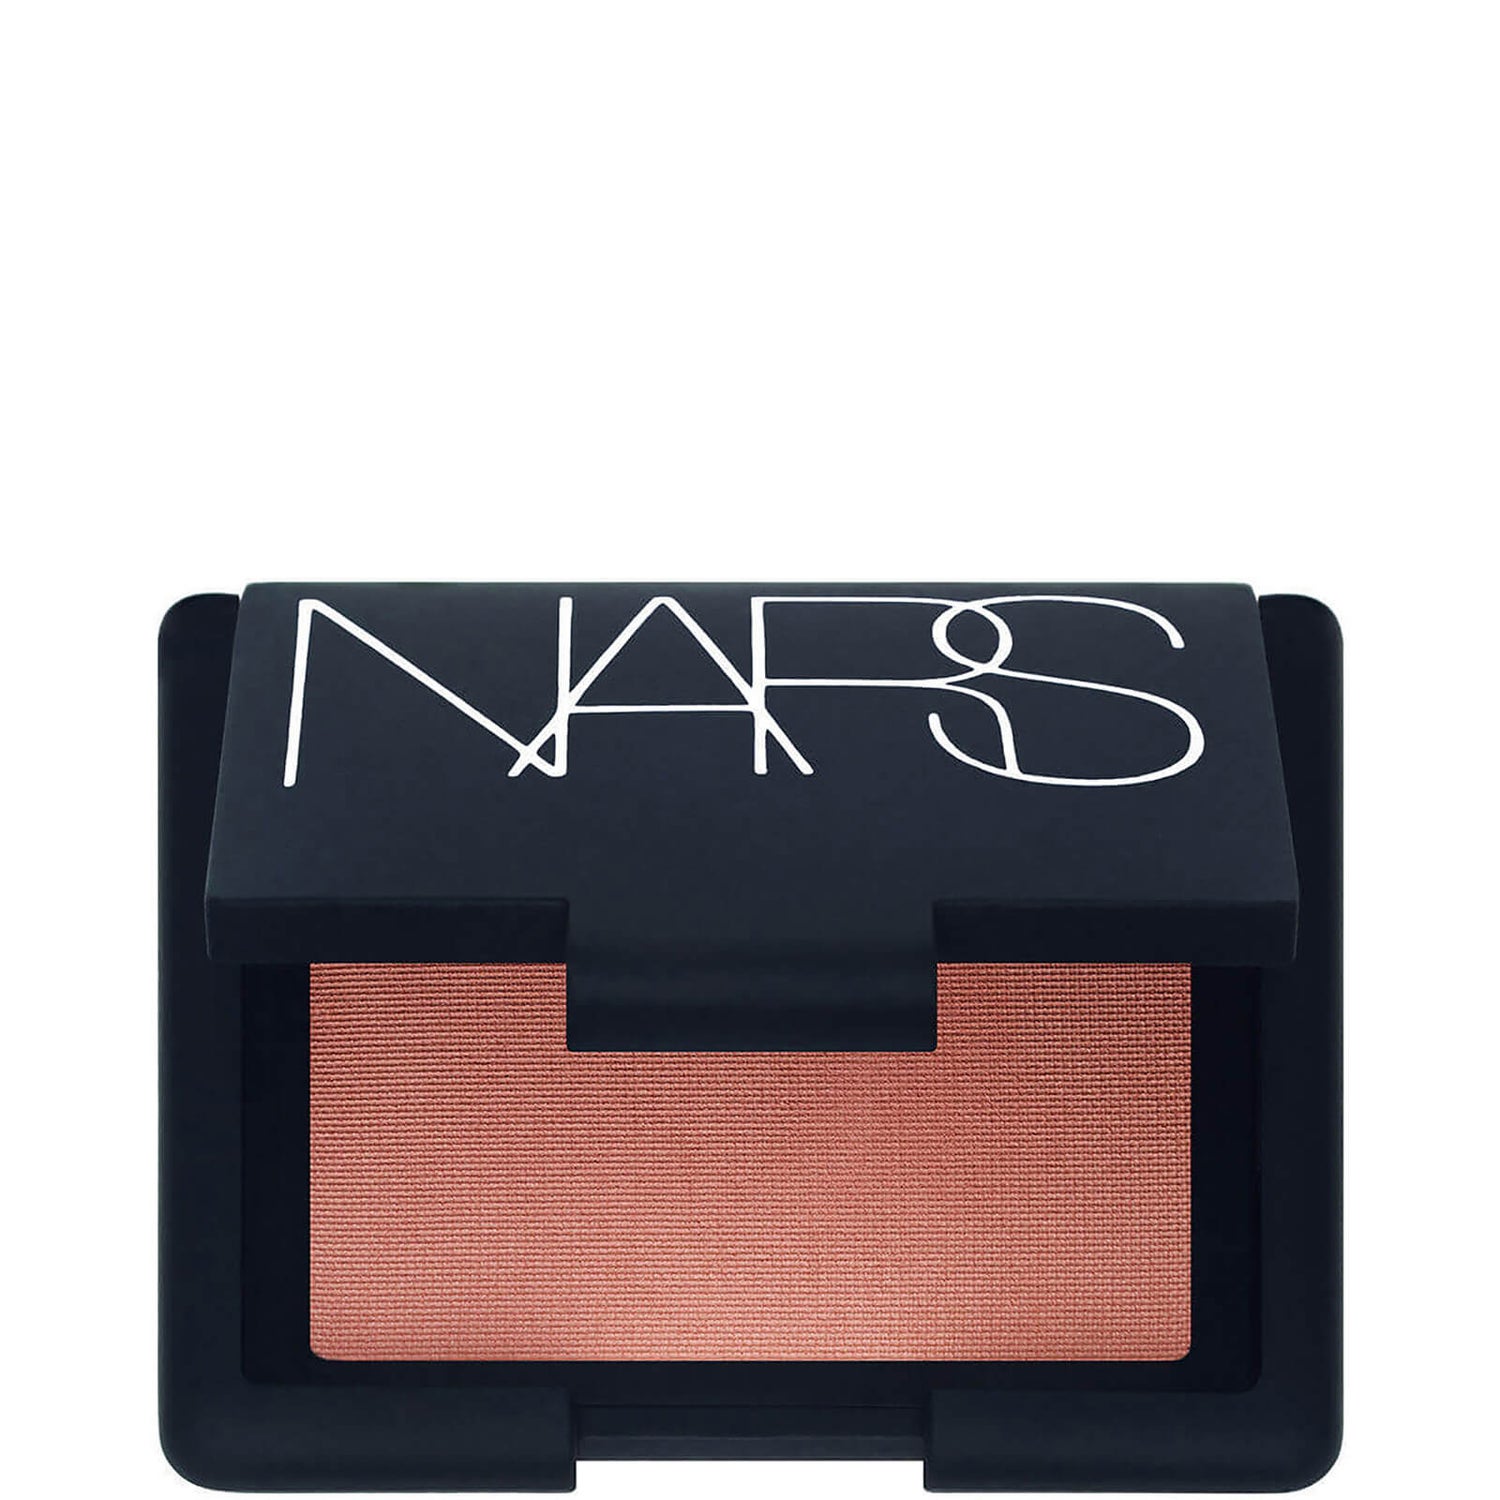 NARS Cosmetics Blush - Dolce Vita